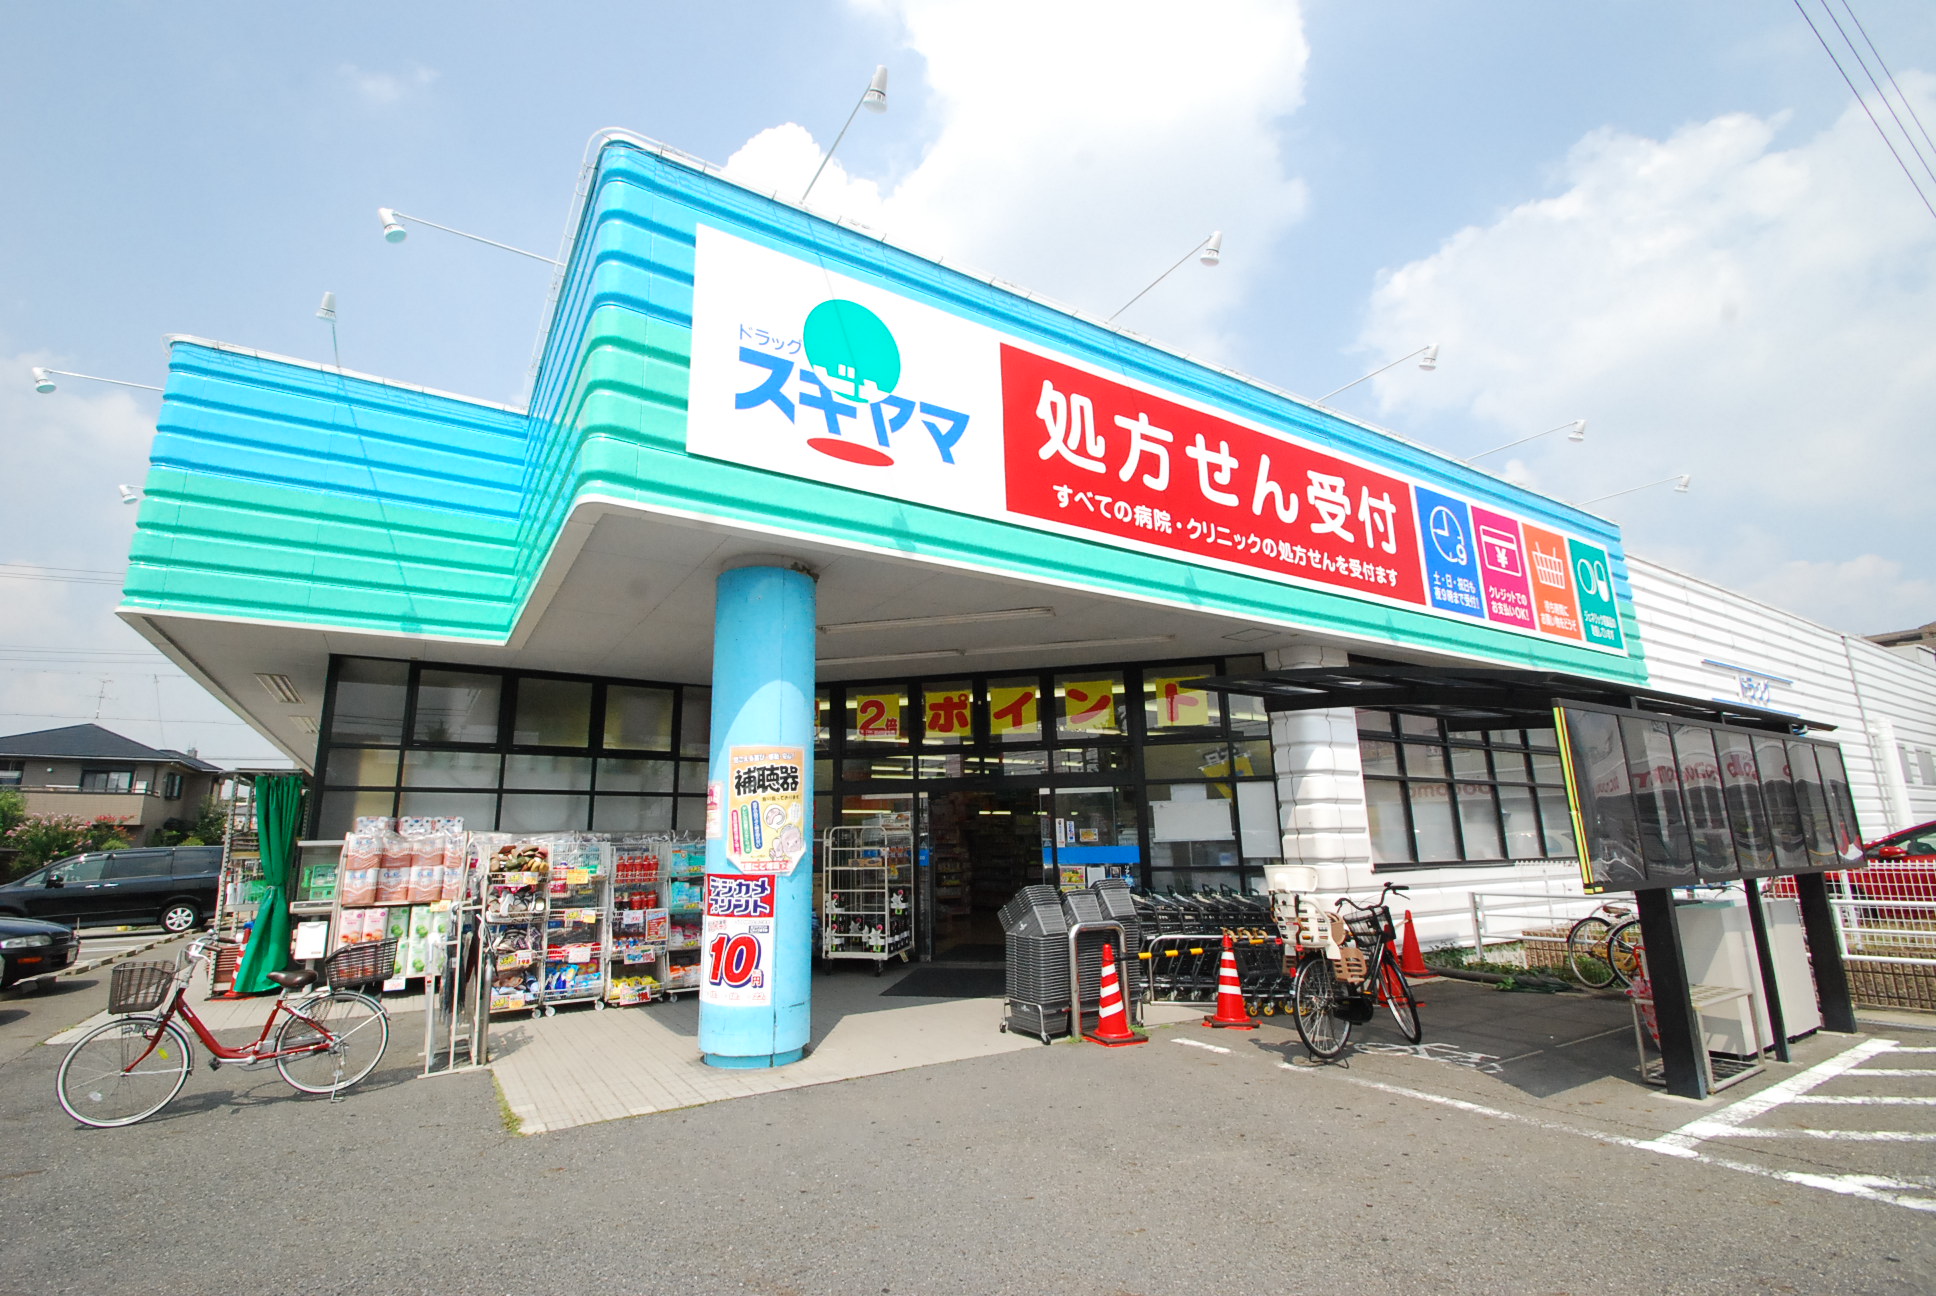 Dorakkusutoa. Drag Sugiyama Chiyoda shop 964m until (drugstore)